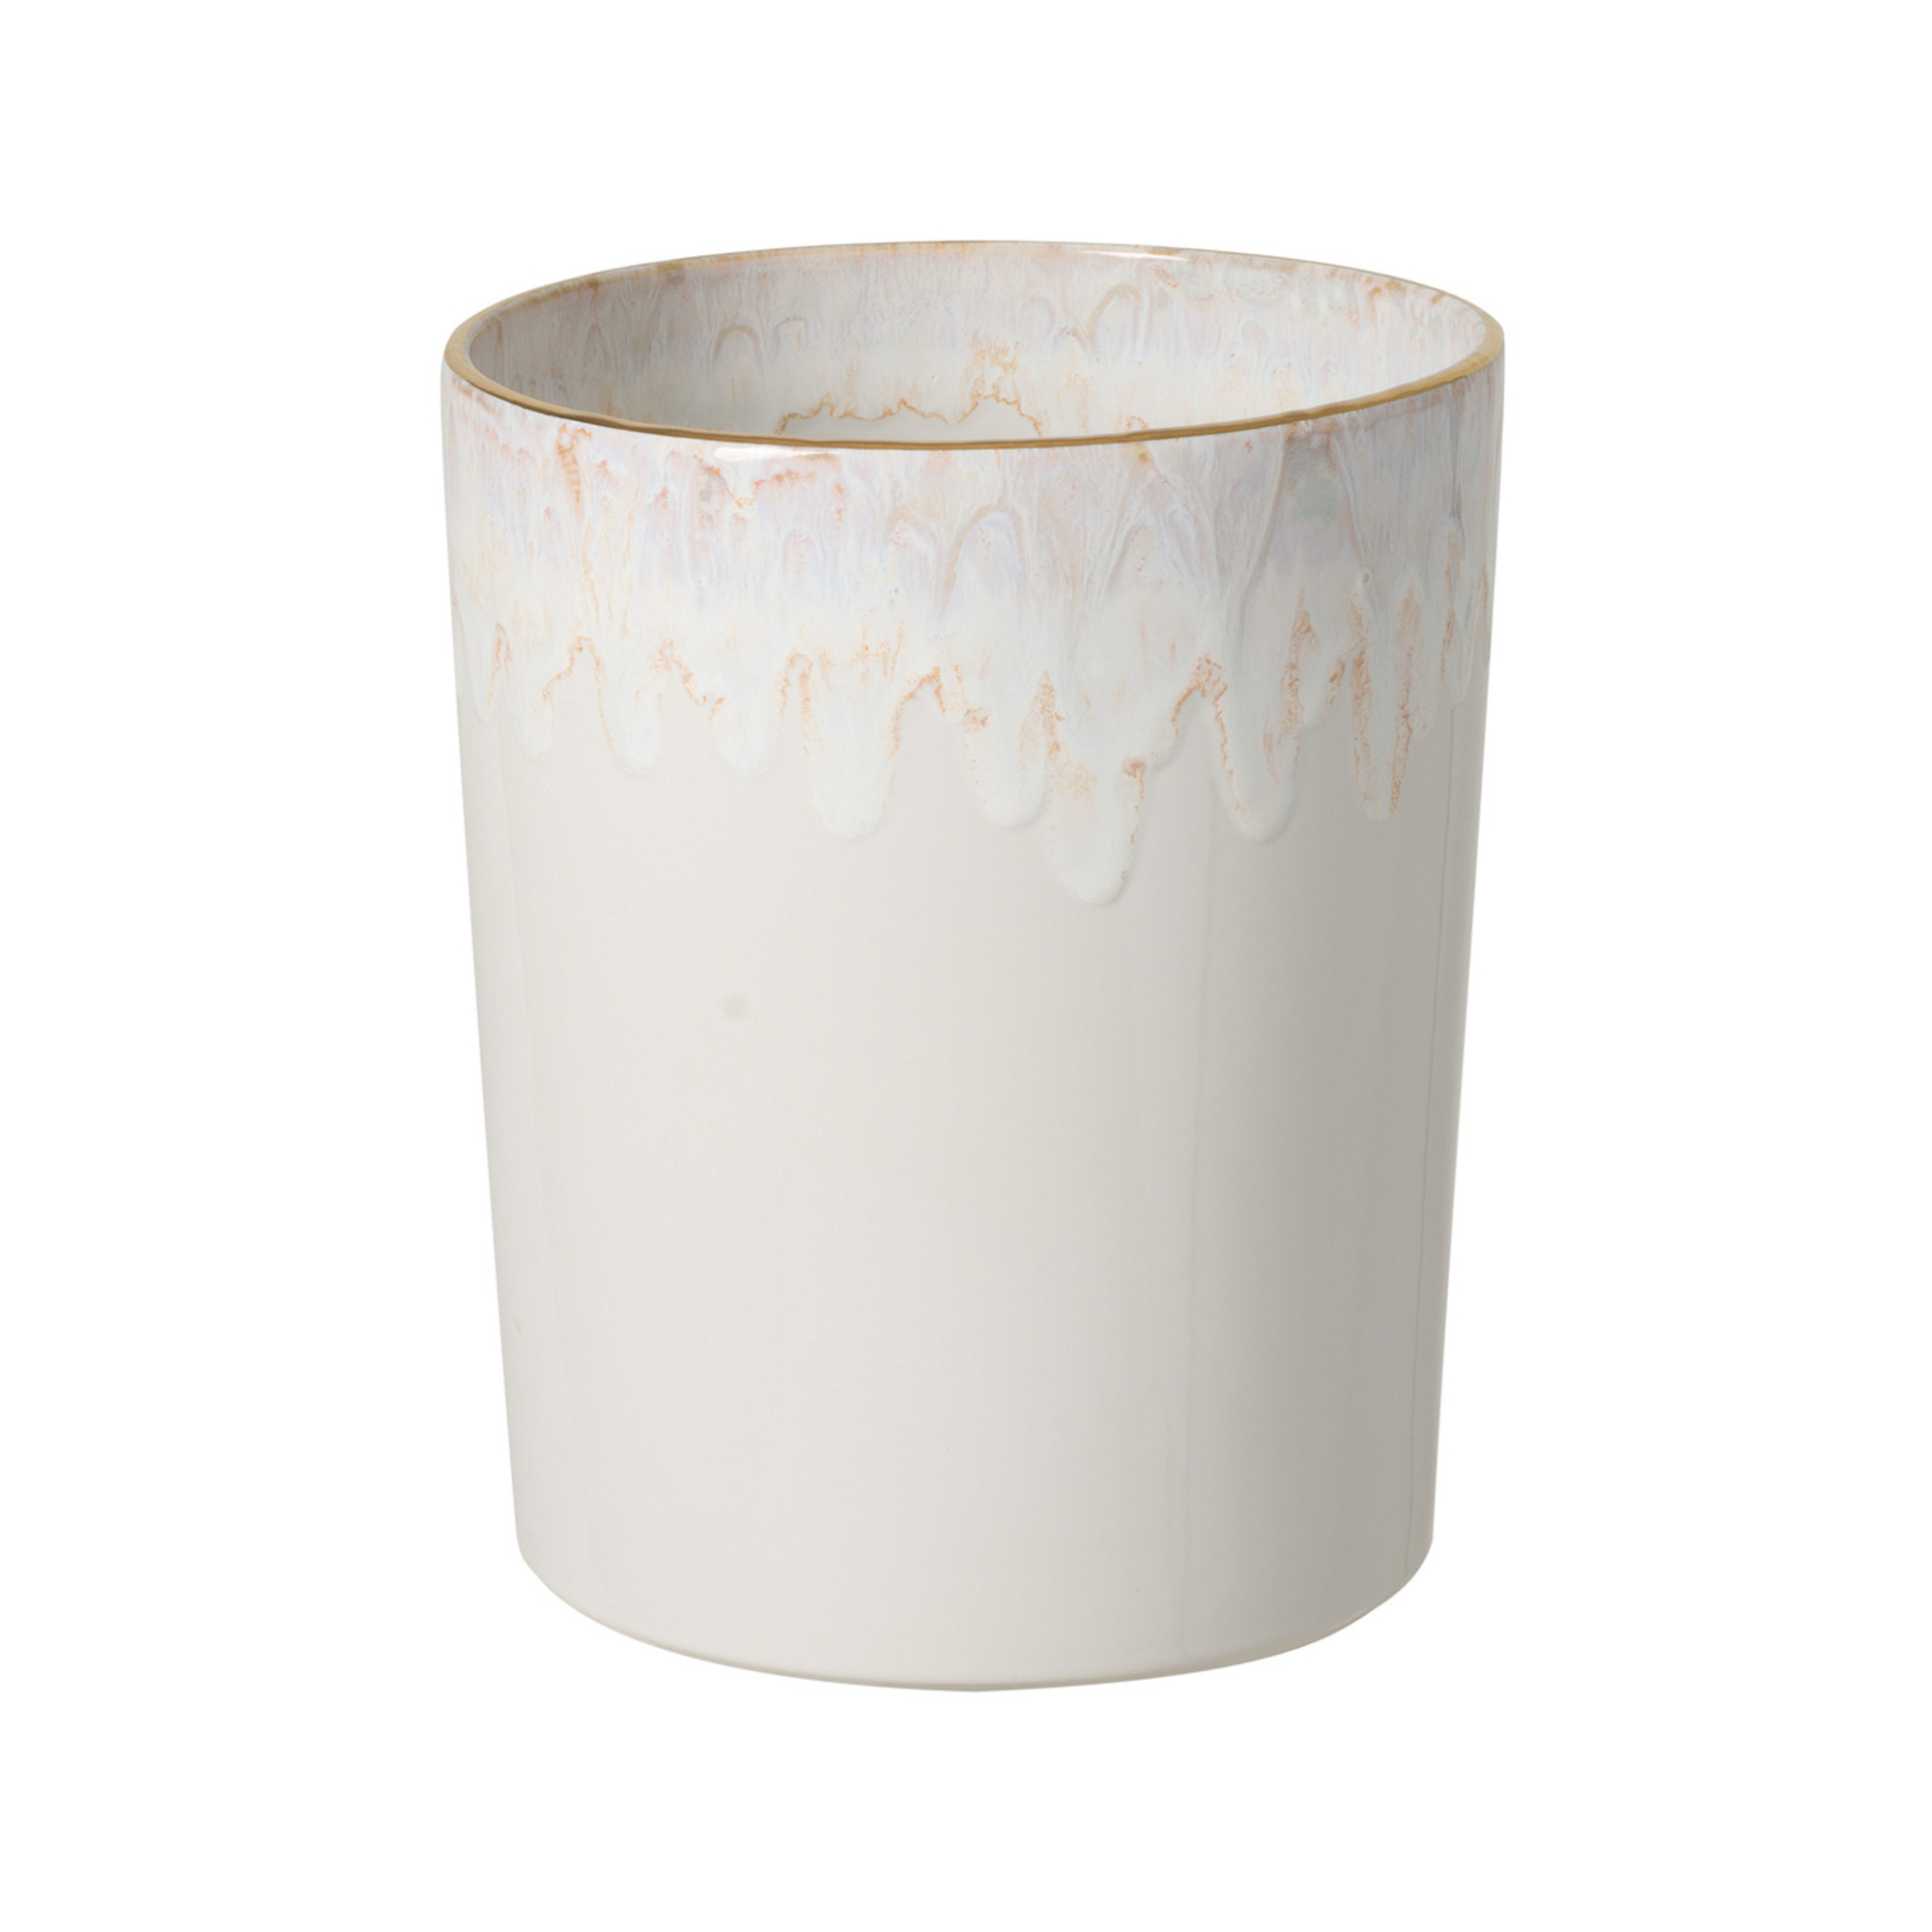 Casafina Ceramic Wastebasket Trash Can - Taormina Collection, Aqua |  Stoneware Bathroom Accessories | Quality Bath Decor | 8'' x 9.75'', 203 oz.